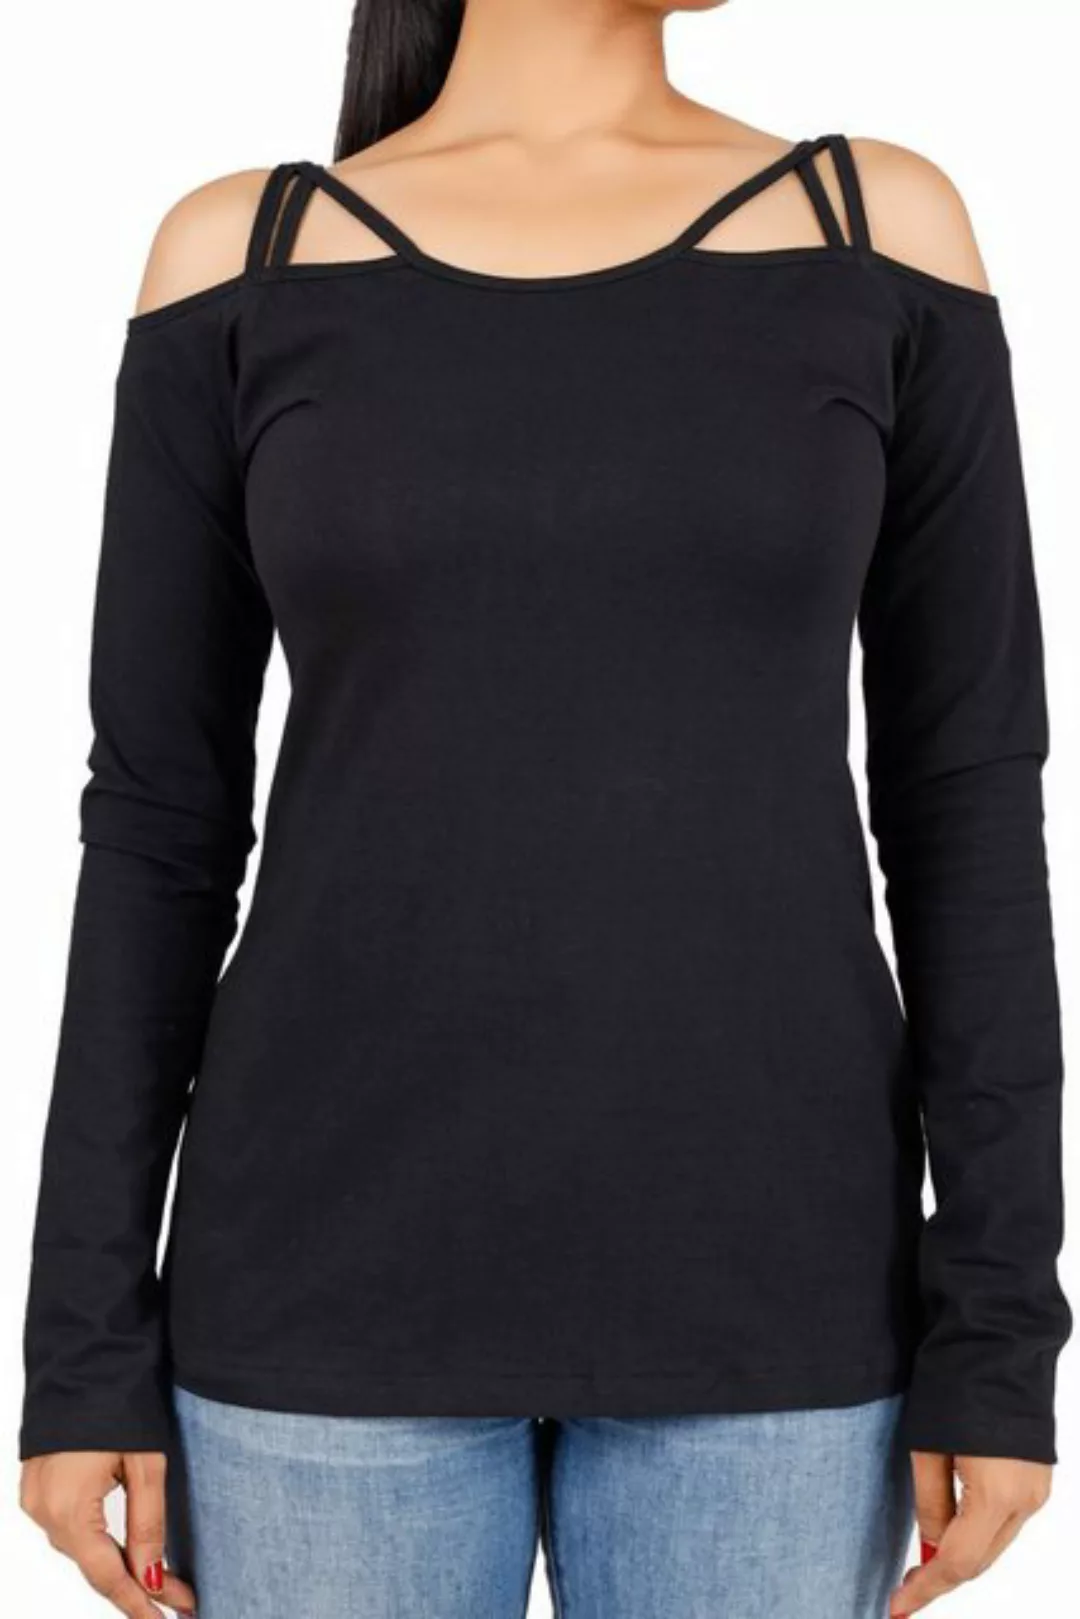 Guru-Shop Longsleeve Goa Shirt, Boho Shirt - schwarz alternative Bekleidung günstig online kaufen